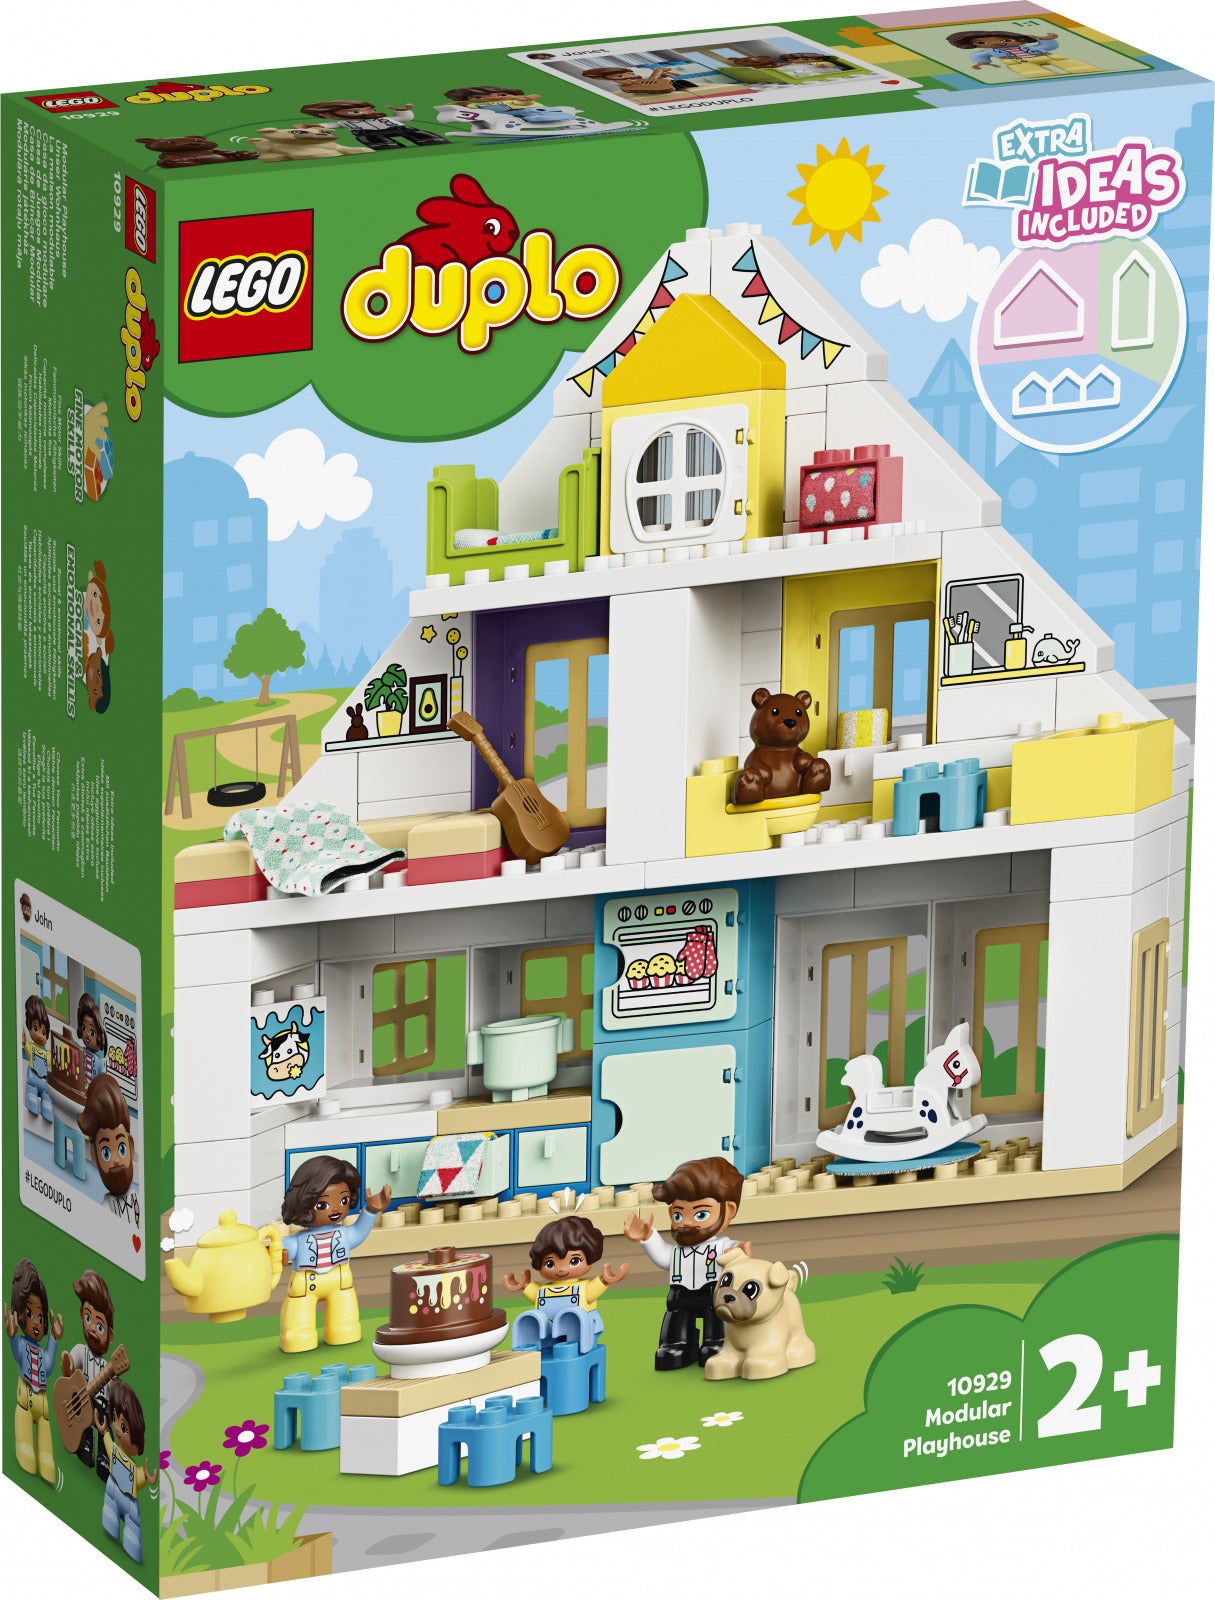 10929 LEGO DUPLO Modular Playhouse 2 Courtesy of The LEGO Group